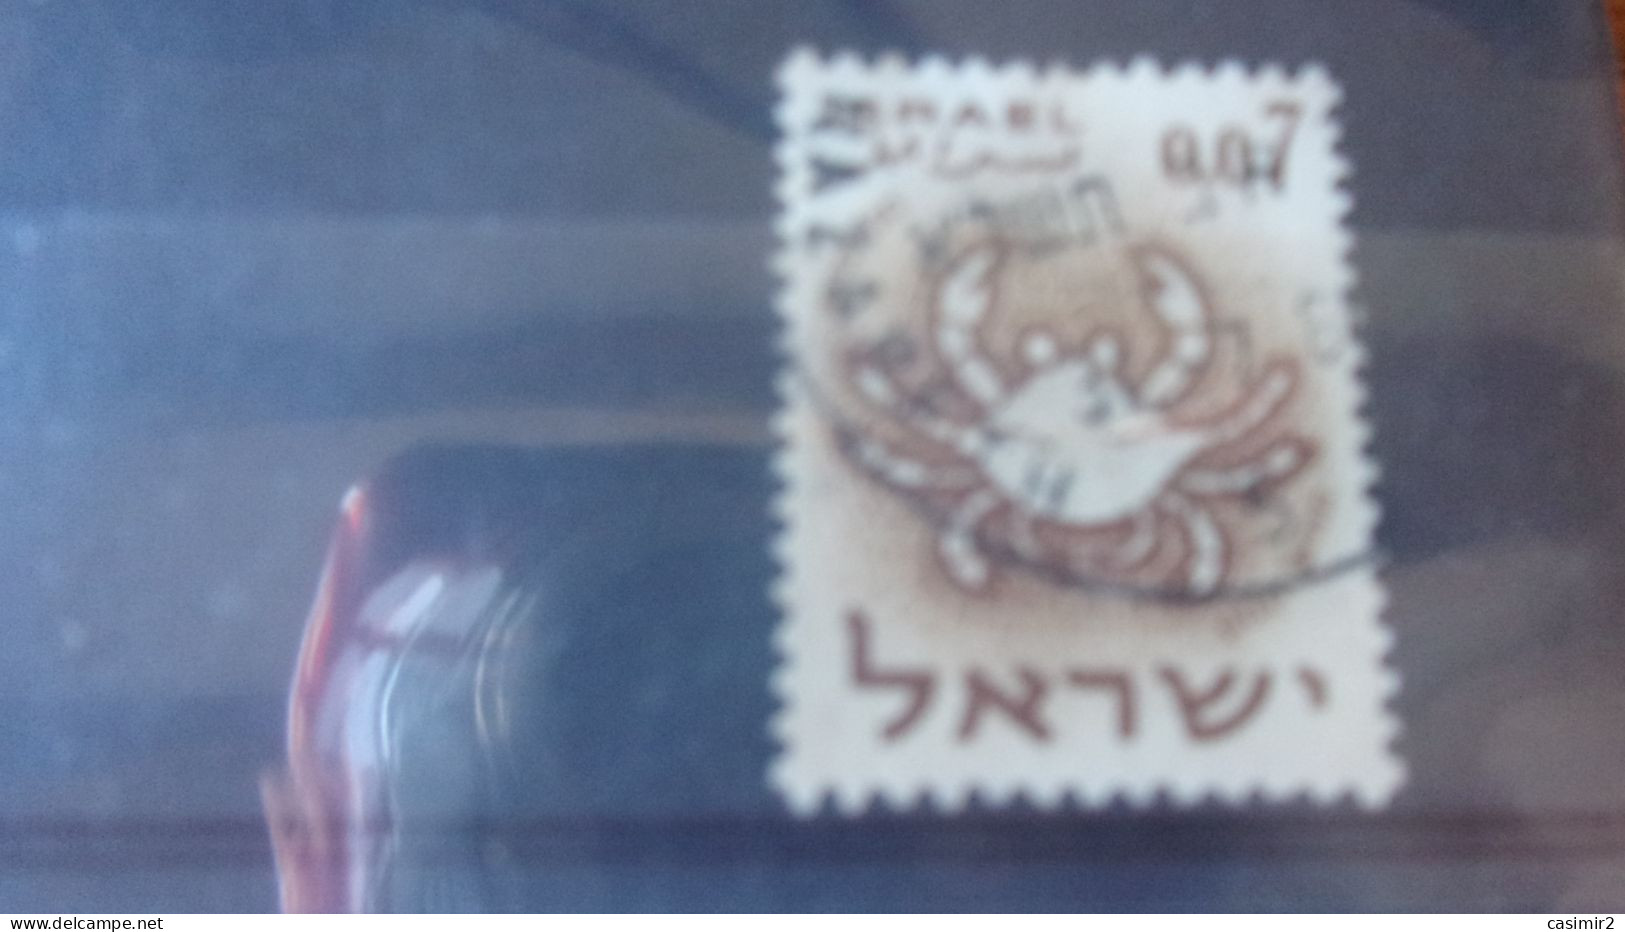 ISRAEL YVERT N° 189 - Usati (senza Tab)